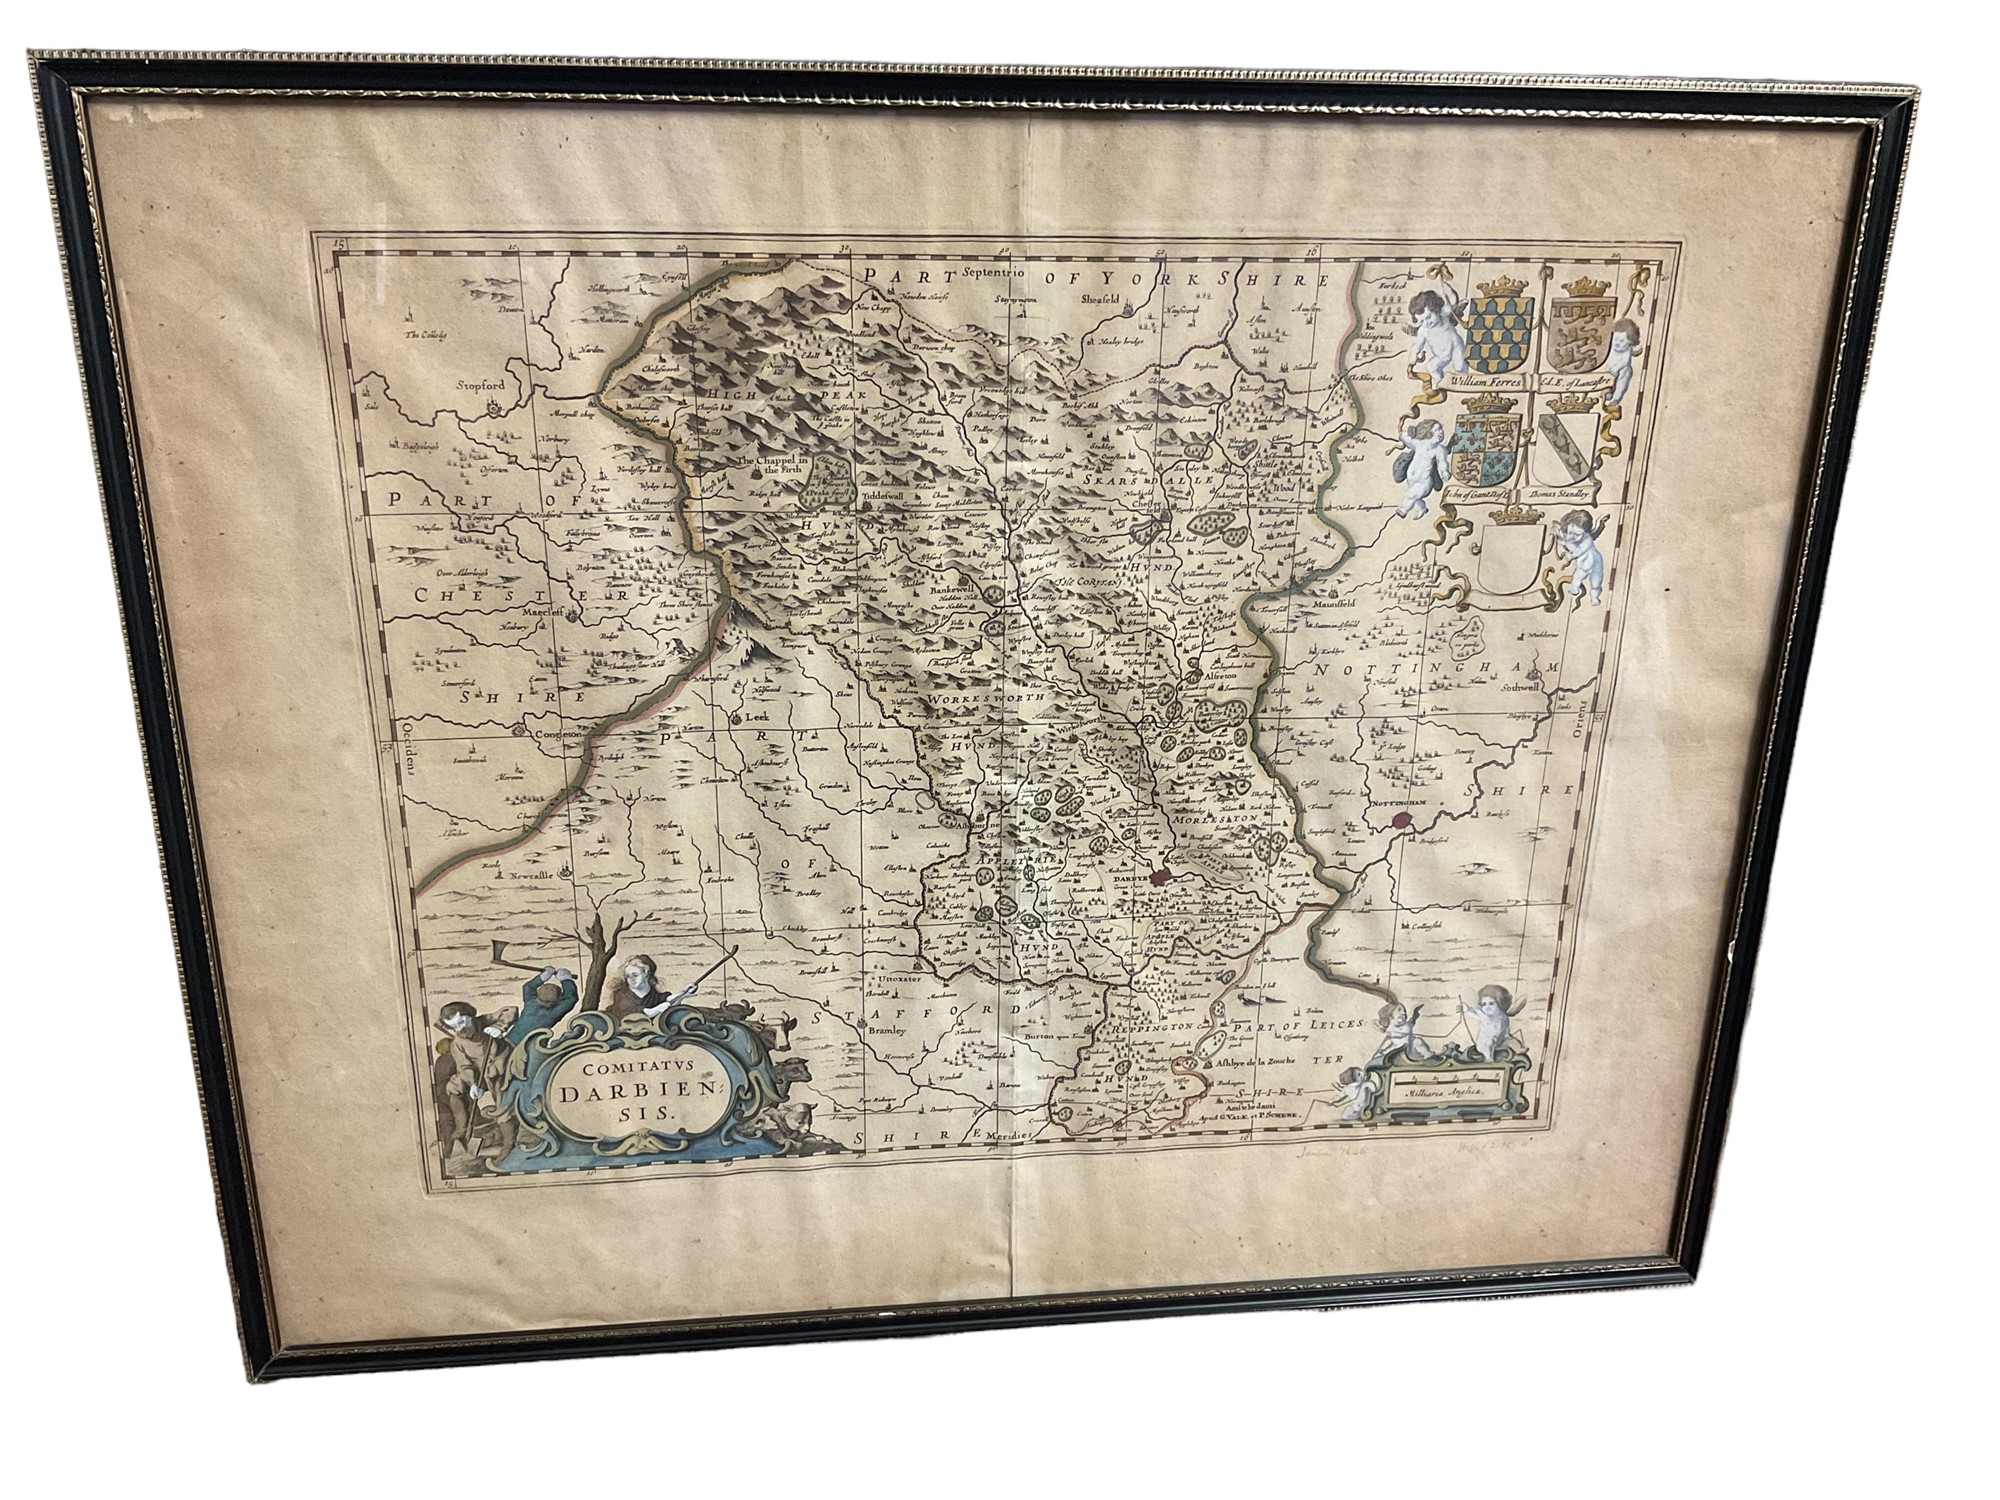 Jan Jansson, 17th century engraved map - ‘Comitatus Darbiensis'